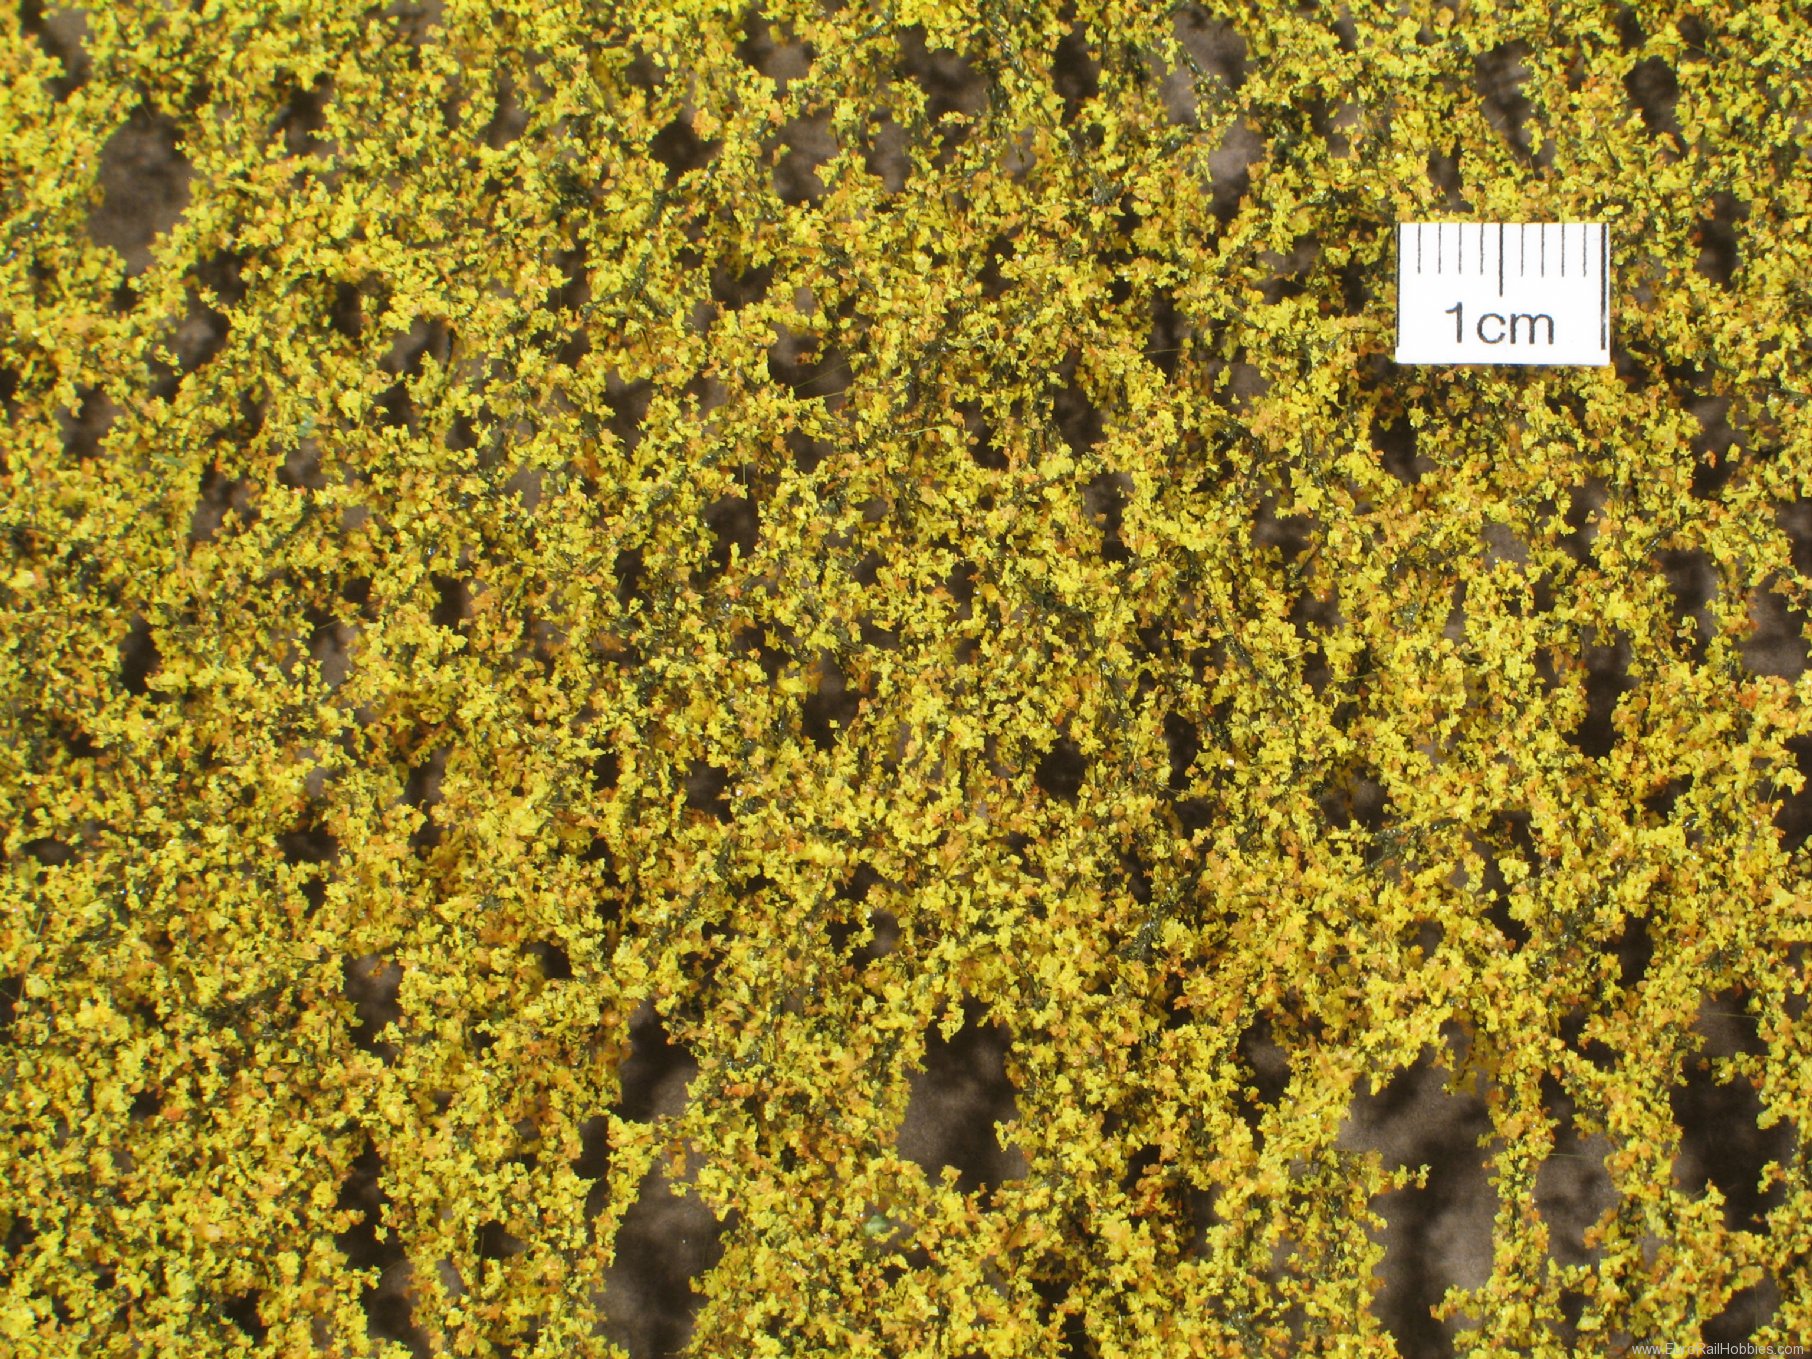 Silhouette Silflor MiniNatur 913-14H Lombardy poplar foliage, Late Fall (50x31,5 c